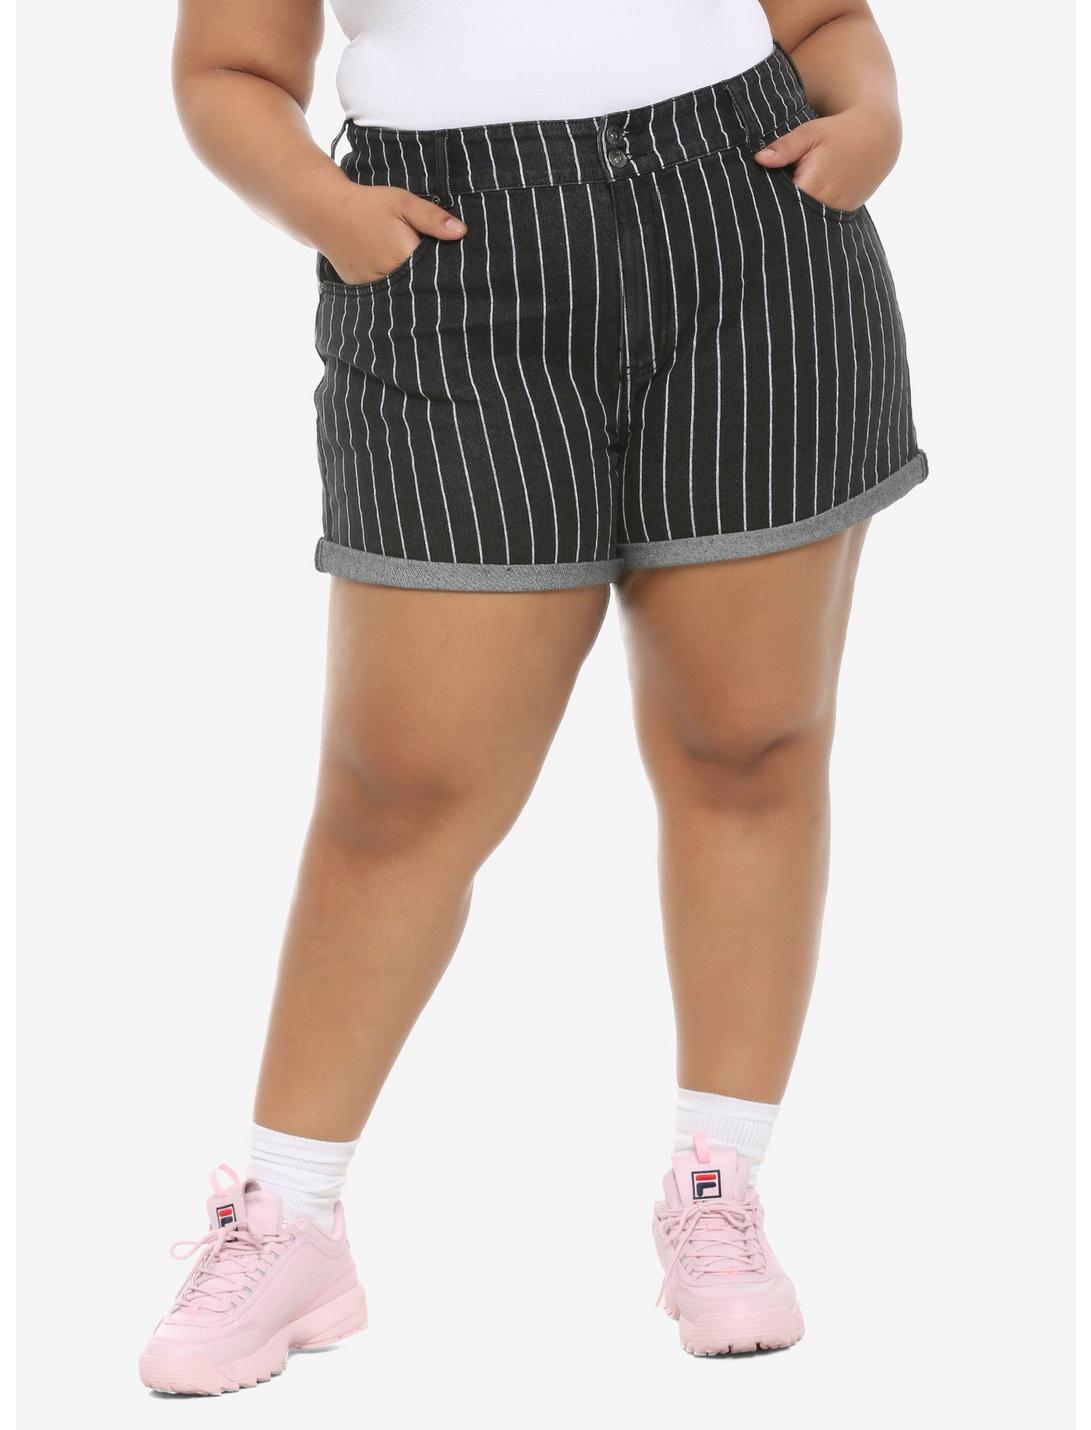 HT Denim Washed Black & White Stripe Mom Shorts Plus Size, PINSTRIPE, hi-res